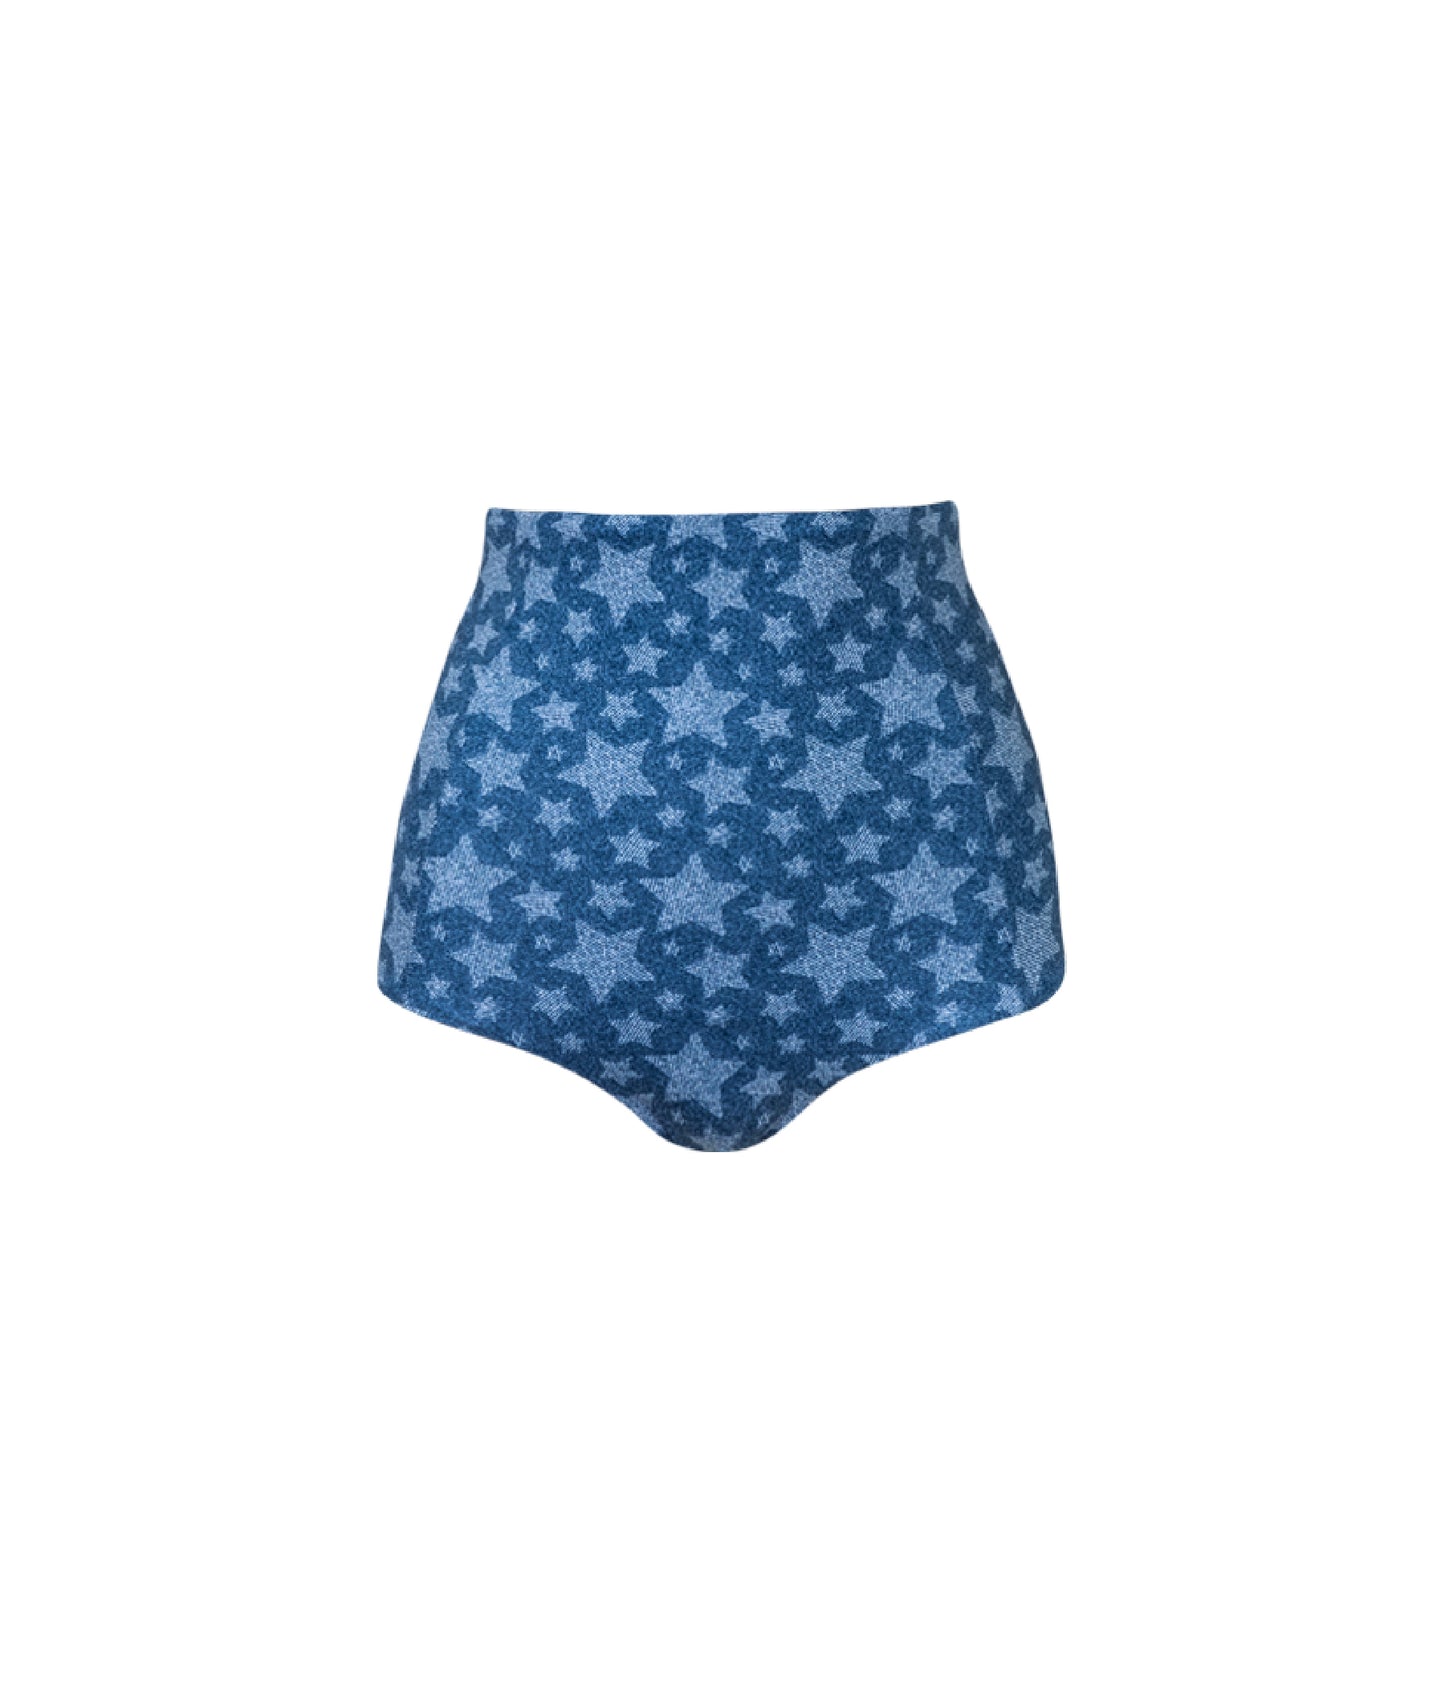 Verdelimon - Bikini Bottom - Tottori - Printed - Denim Strars - Front